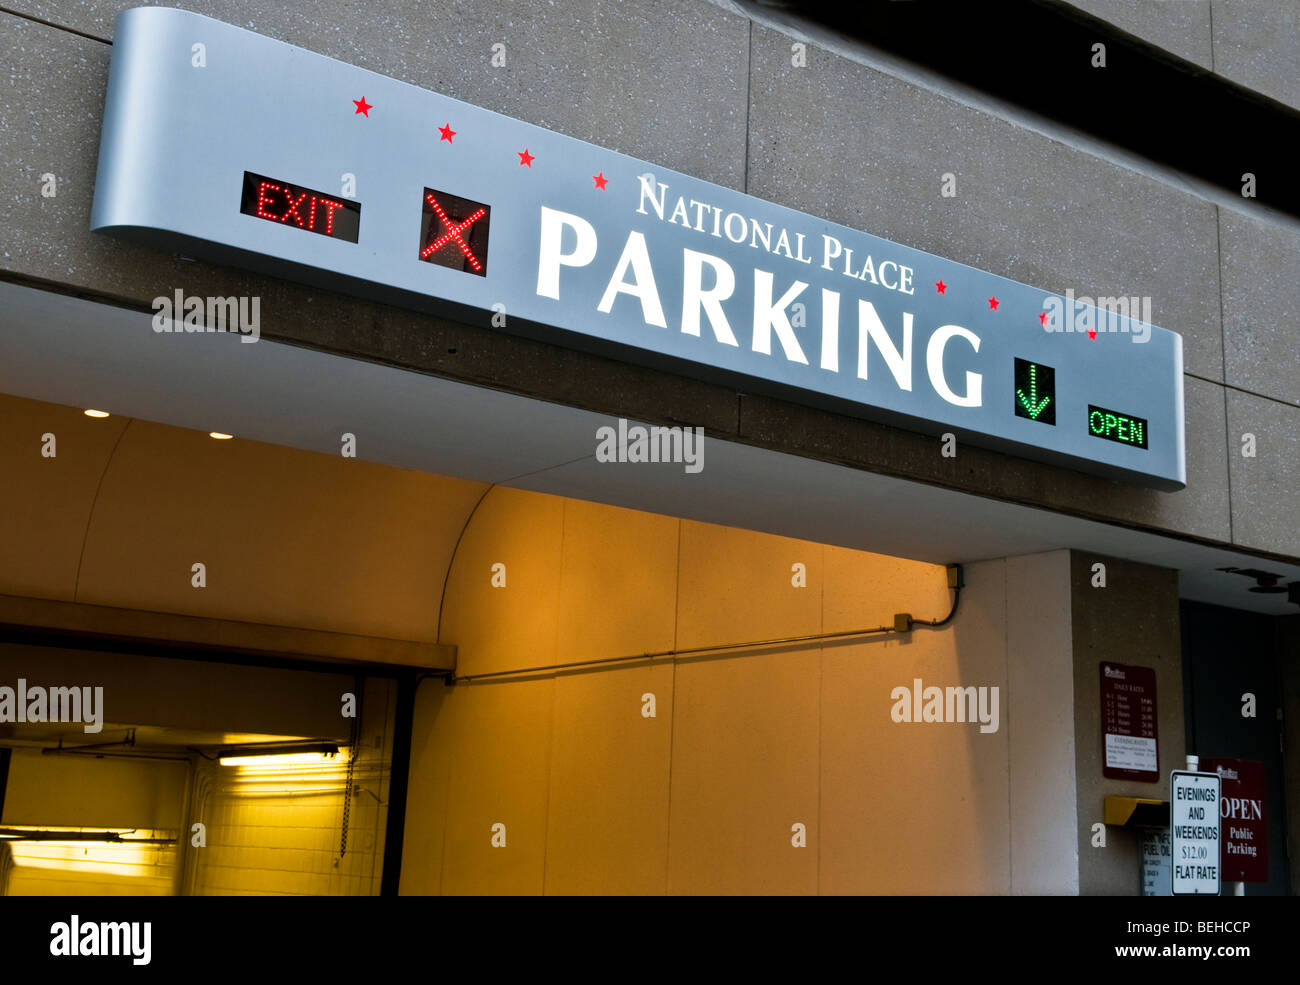 National Place Parking Garage in Washington DC Stock Photo